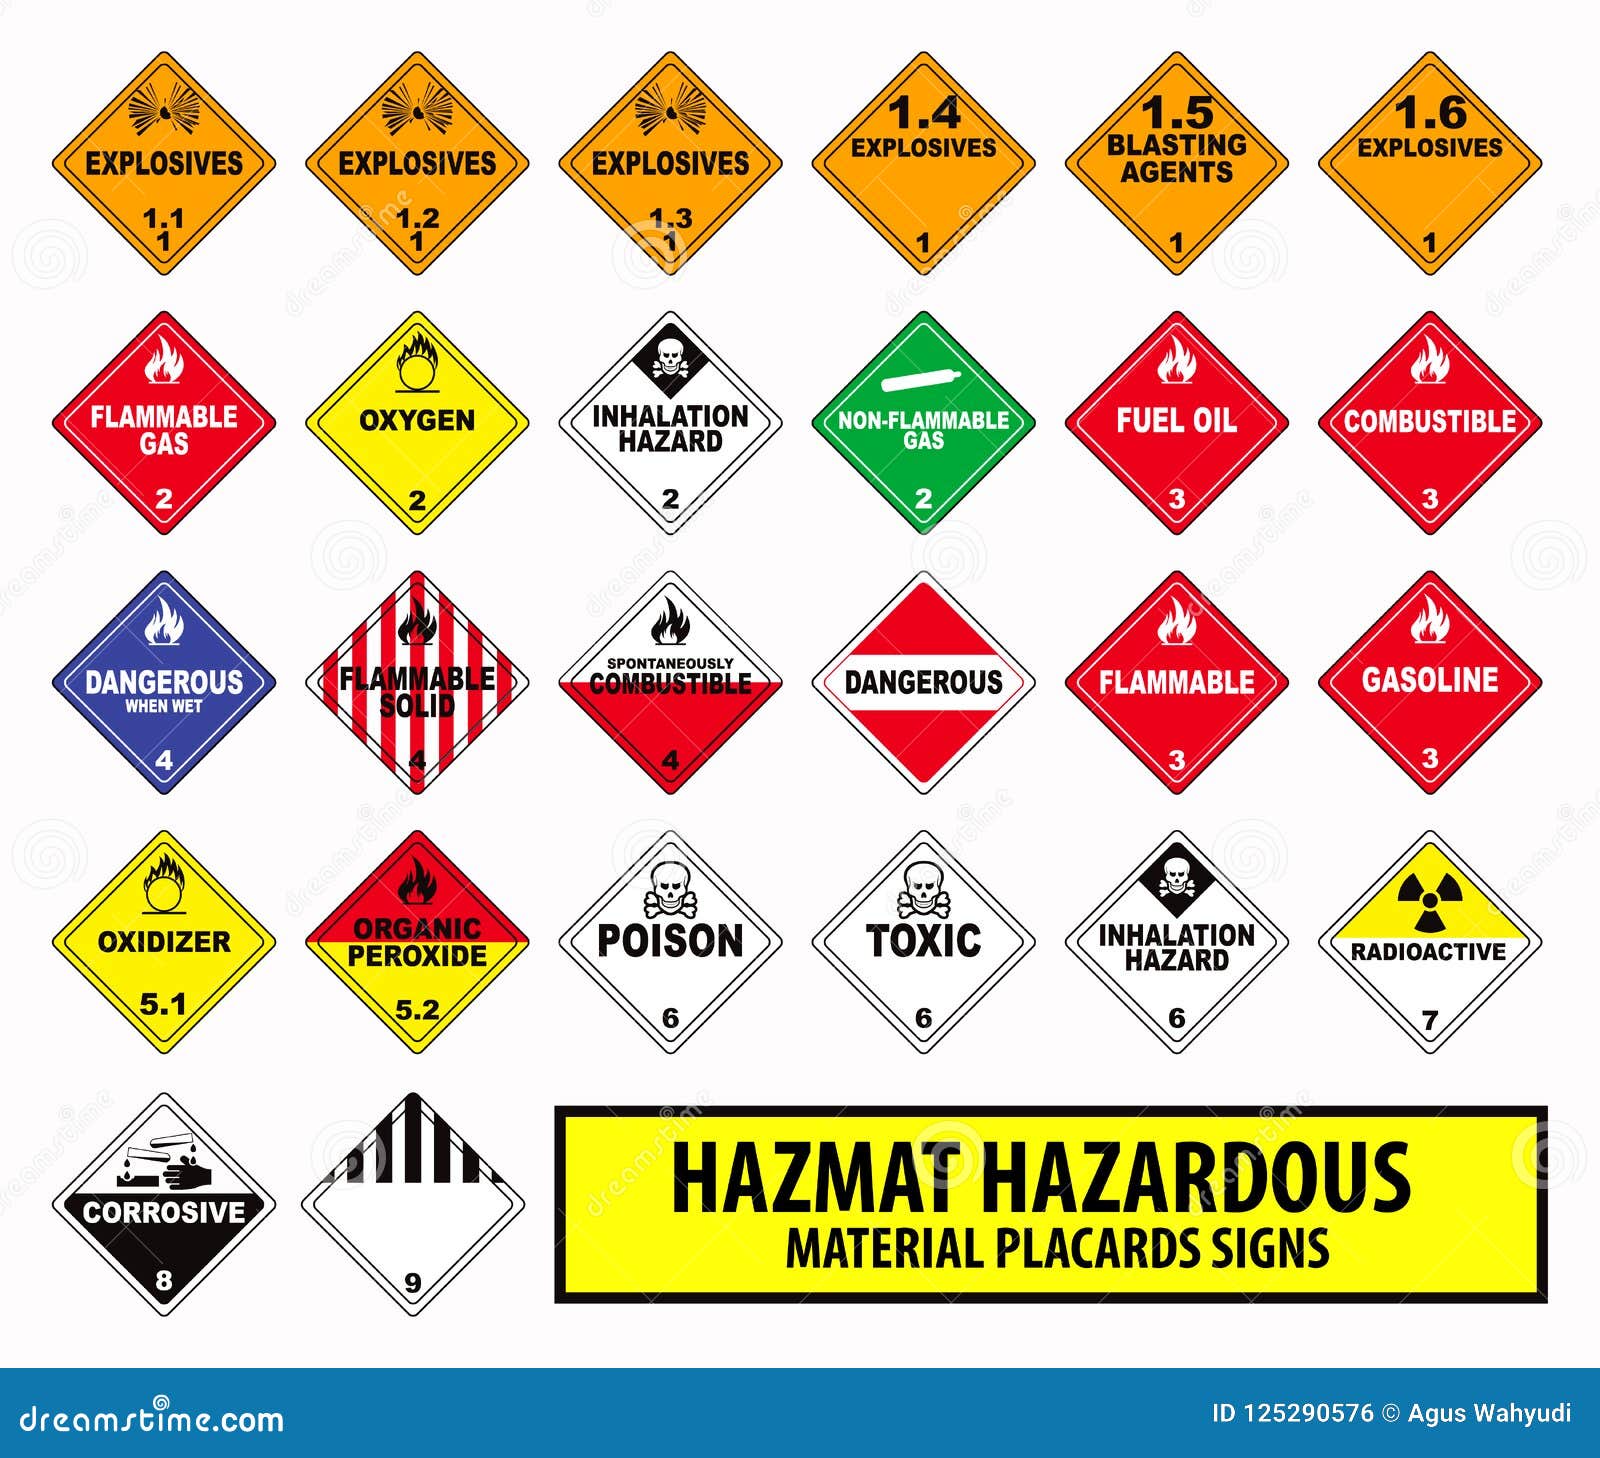 Hazmat Warning Labels